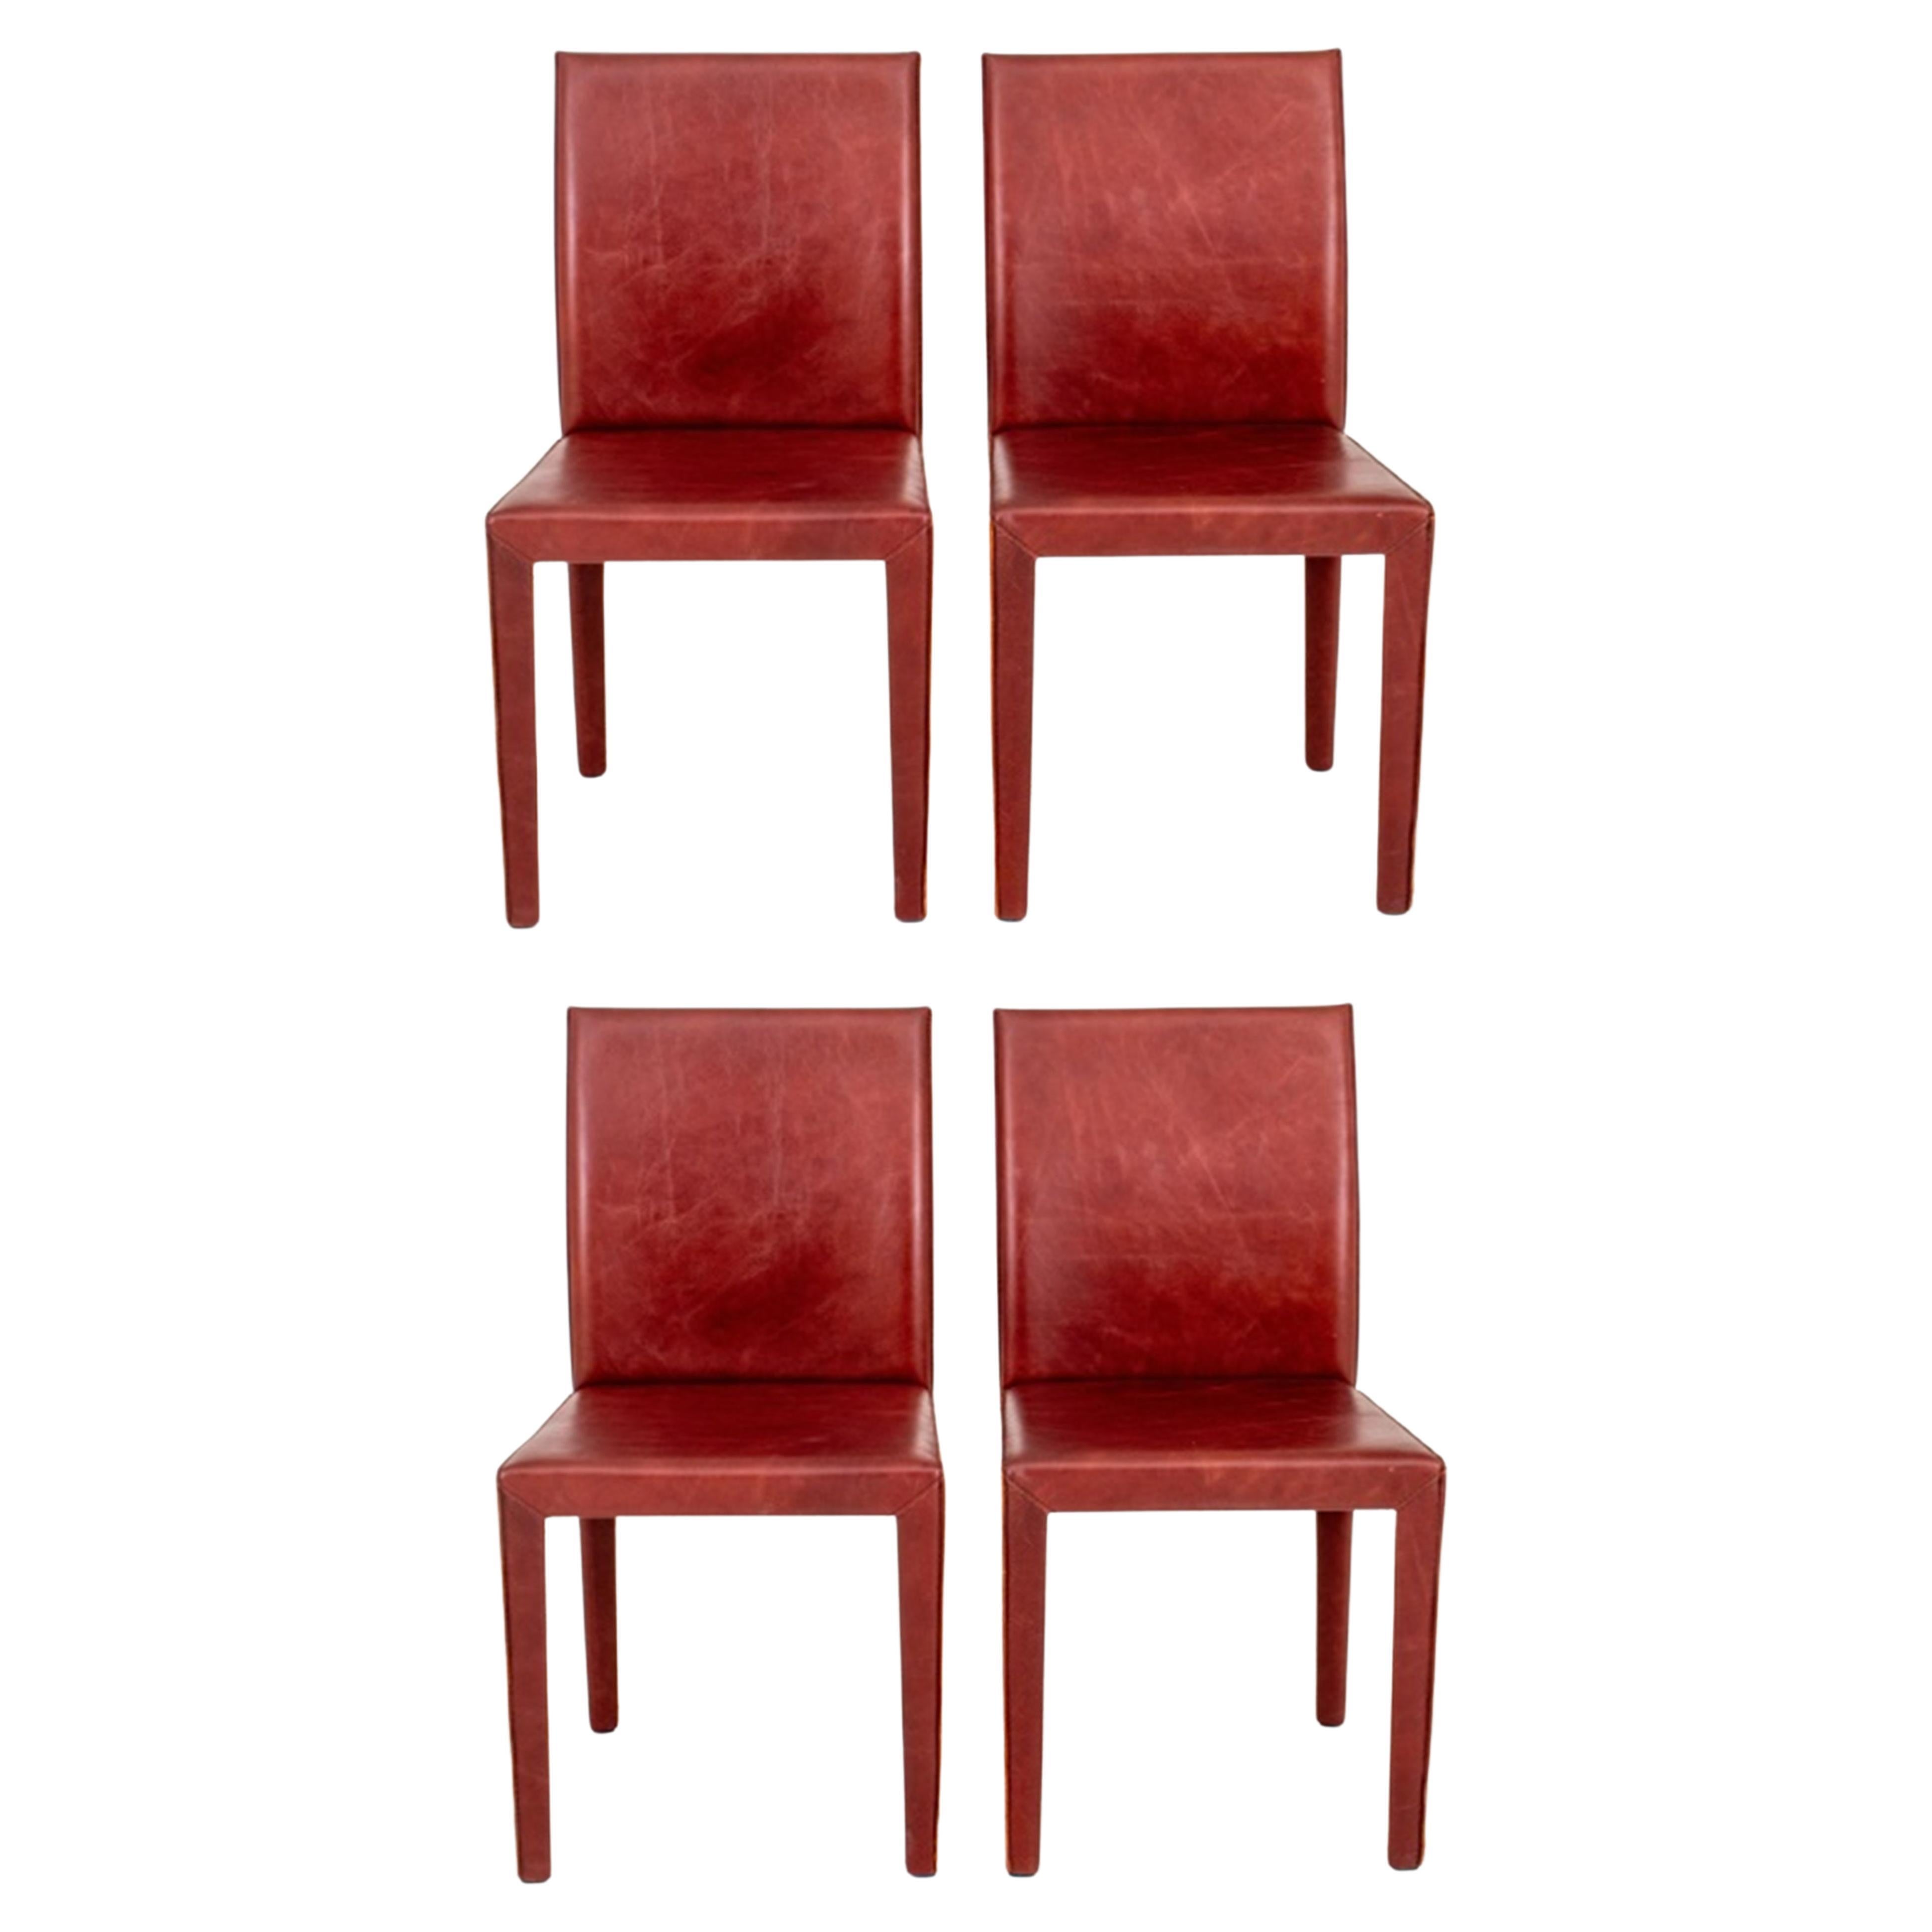 Italian Modern Style Side Chairs